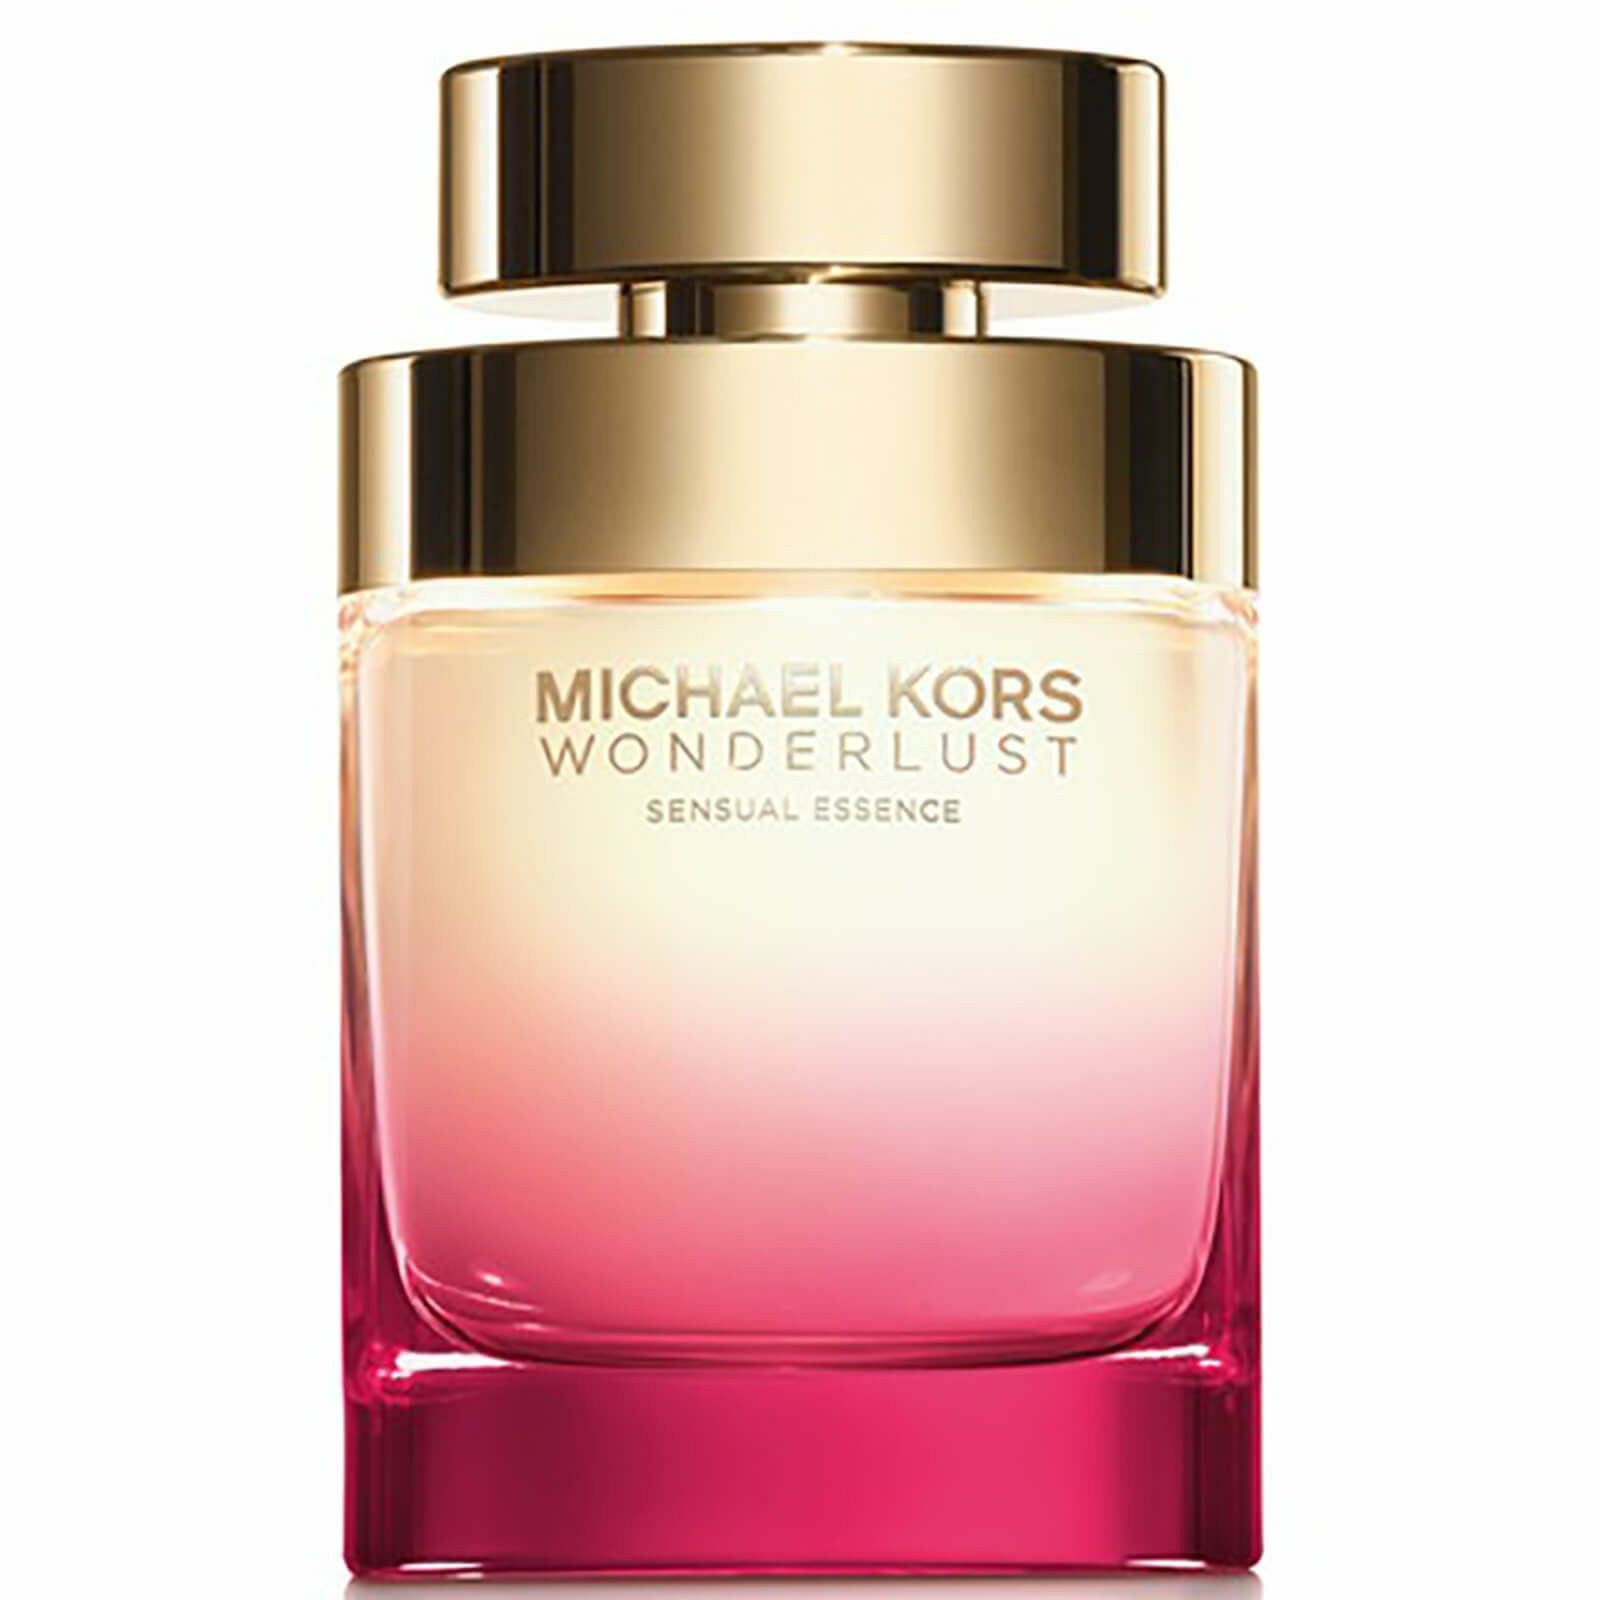 Michael Kors Wonderful Sensual Essence Eau De Parfum for Wom - 100ML